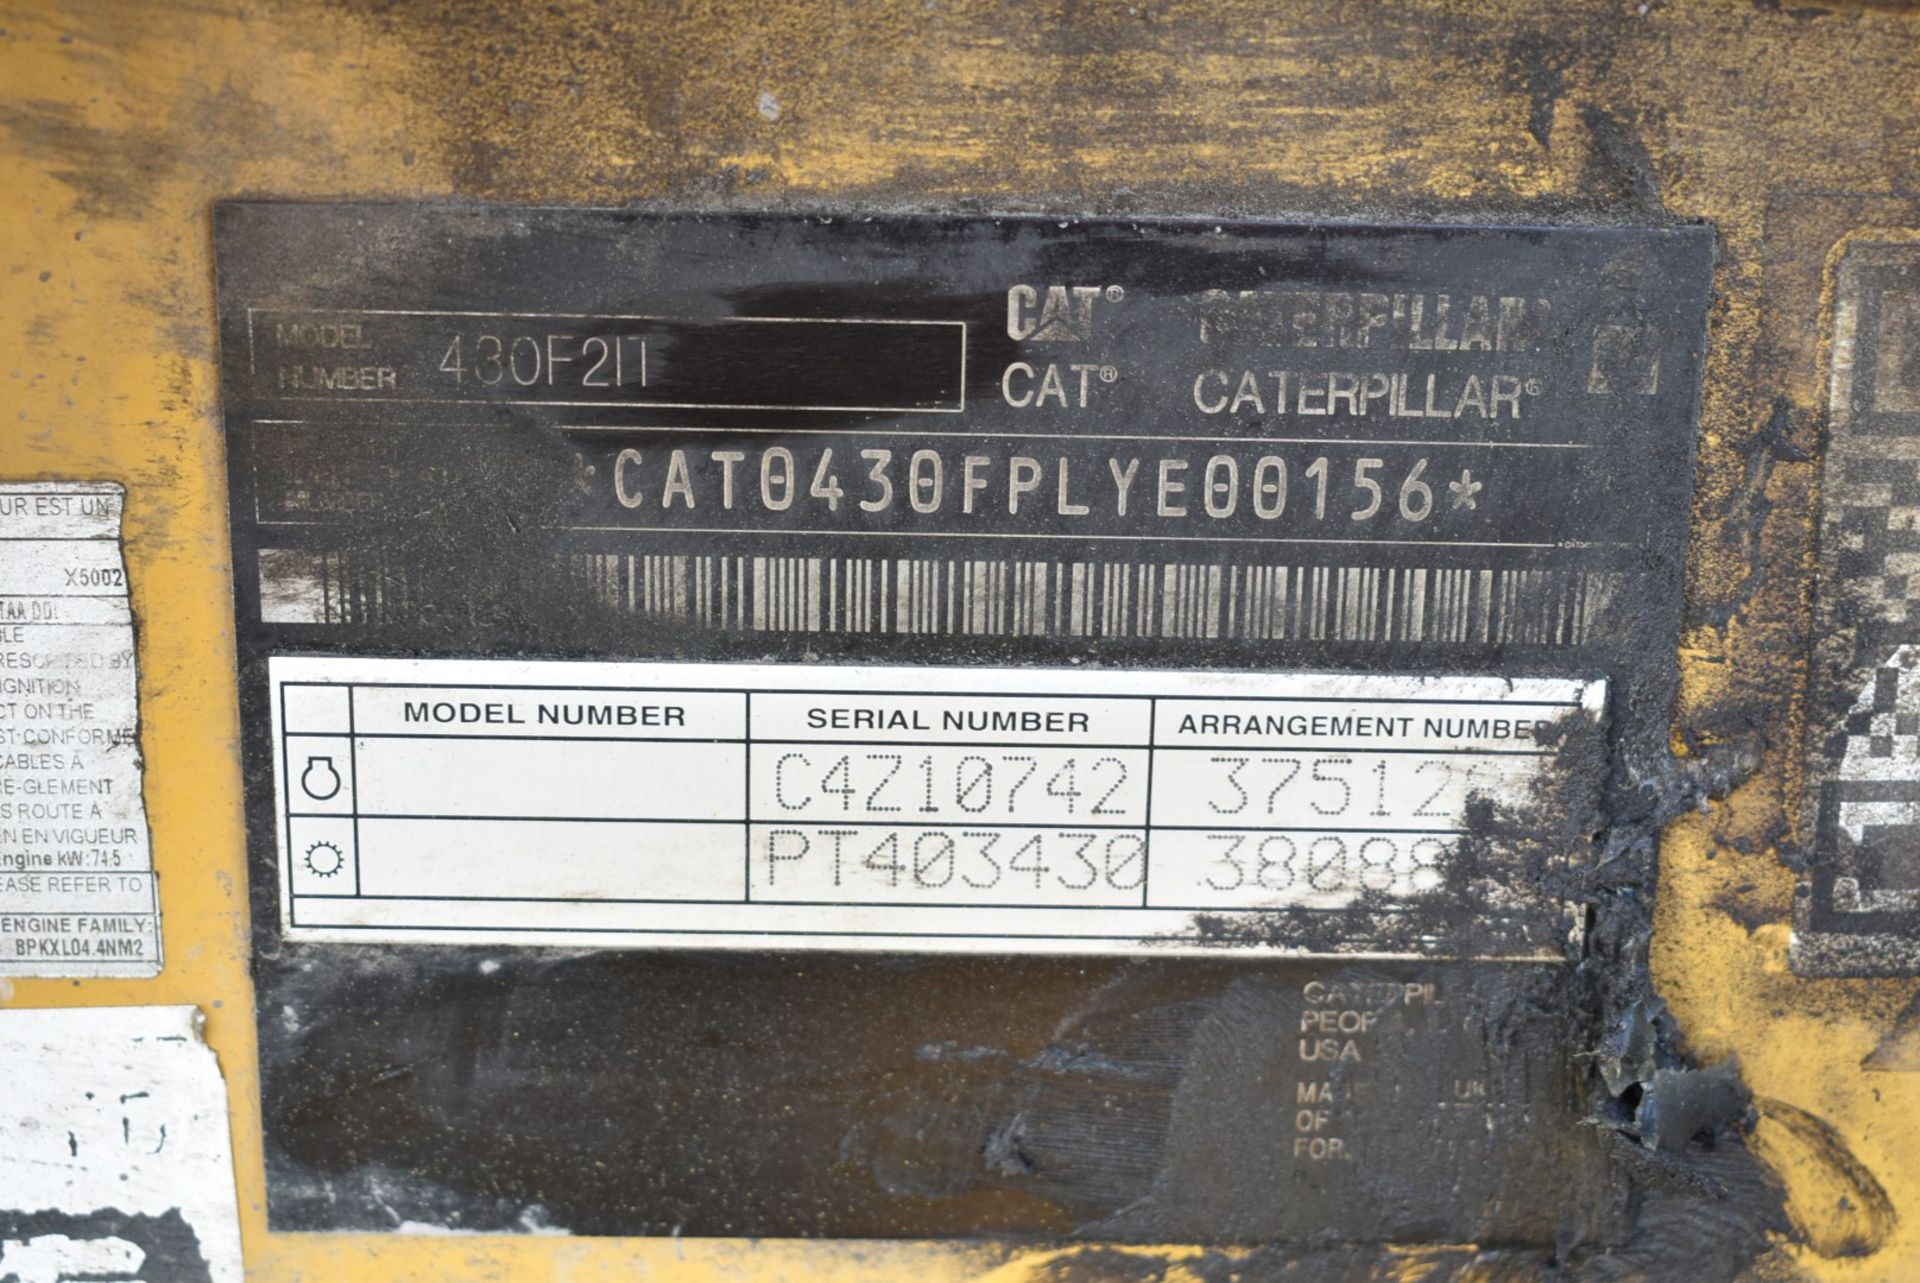 CATERPILLAR (2015) 430F2IT BACKHOE LOADER WITH CATERPILLAR C4.4B DIESEL ENGINE, 92" LOADER BUCKET, - Image 2 of 2